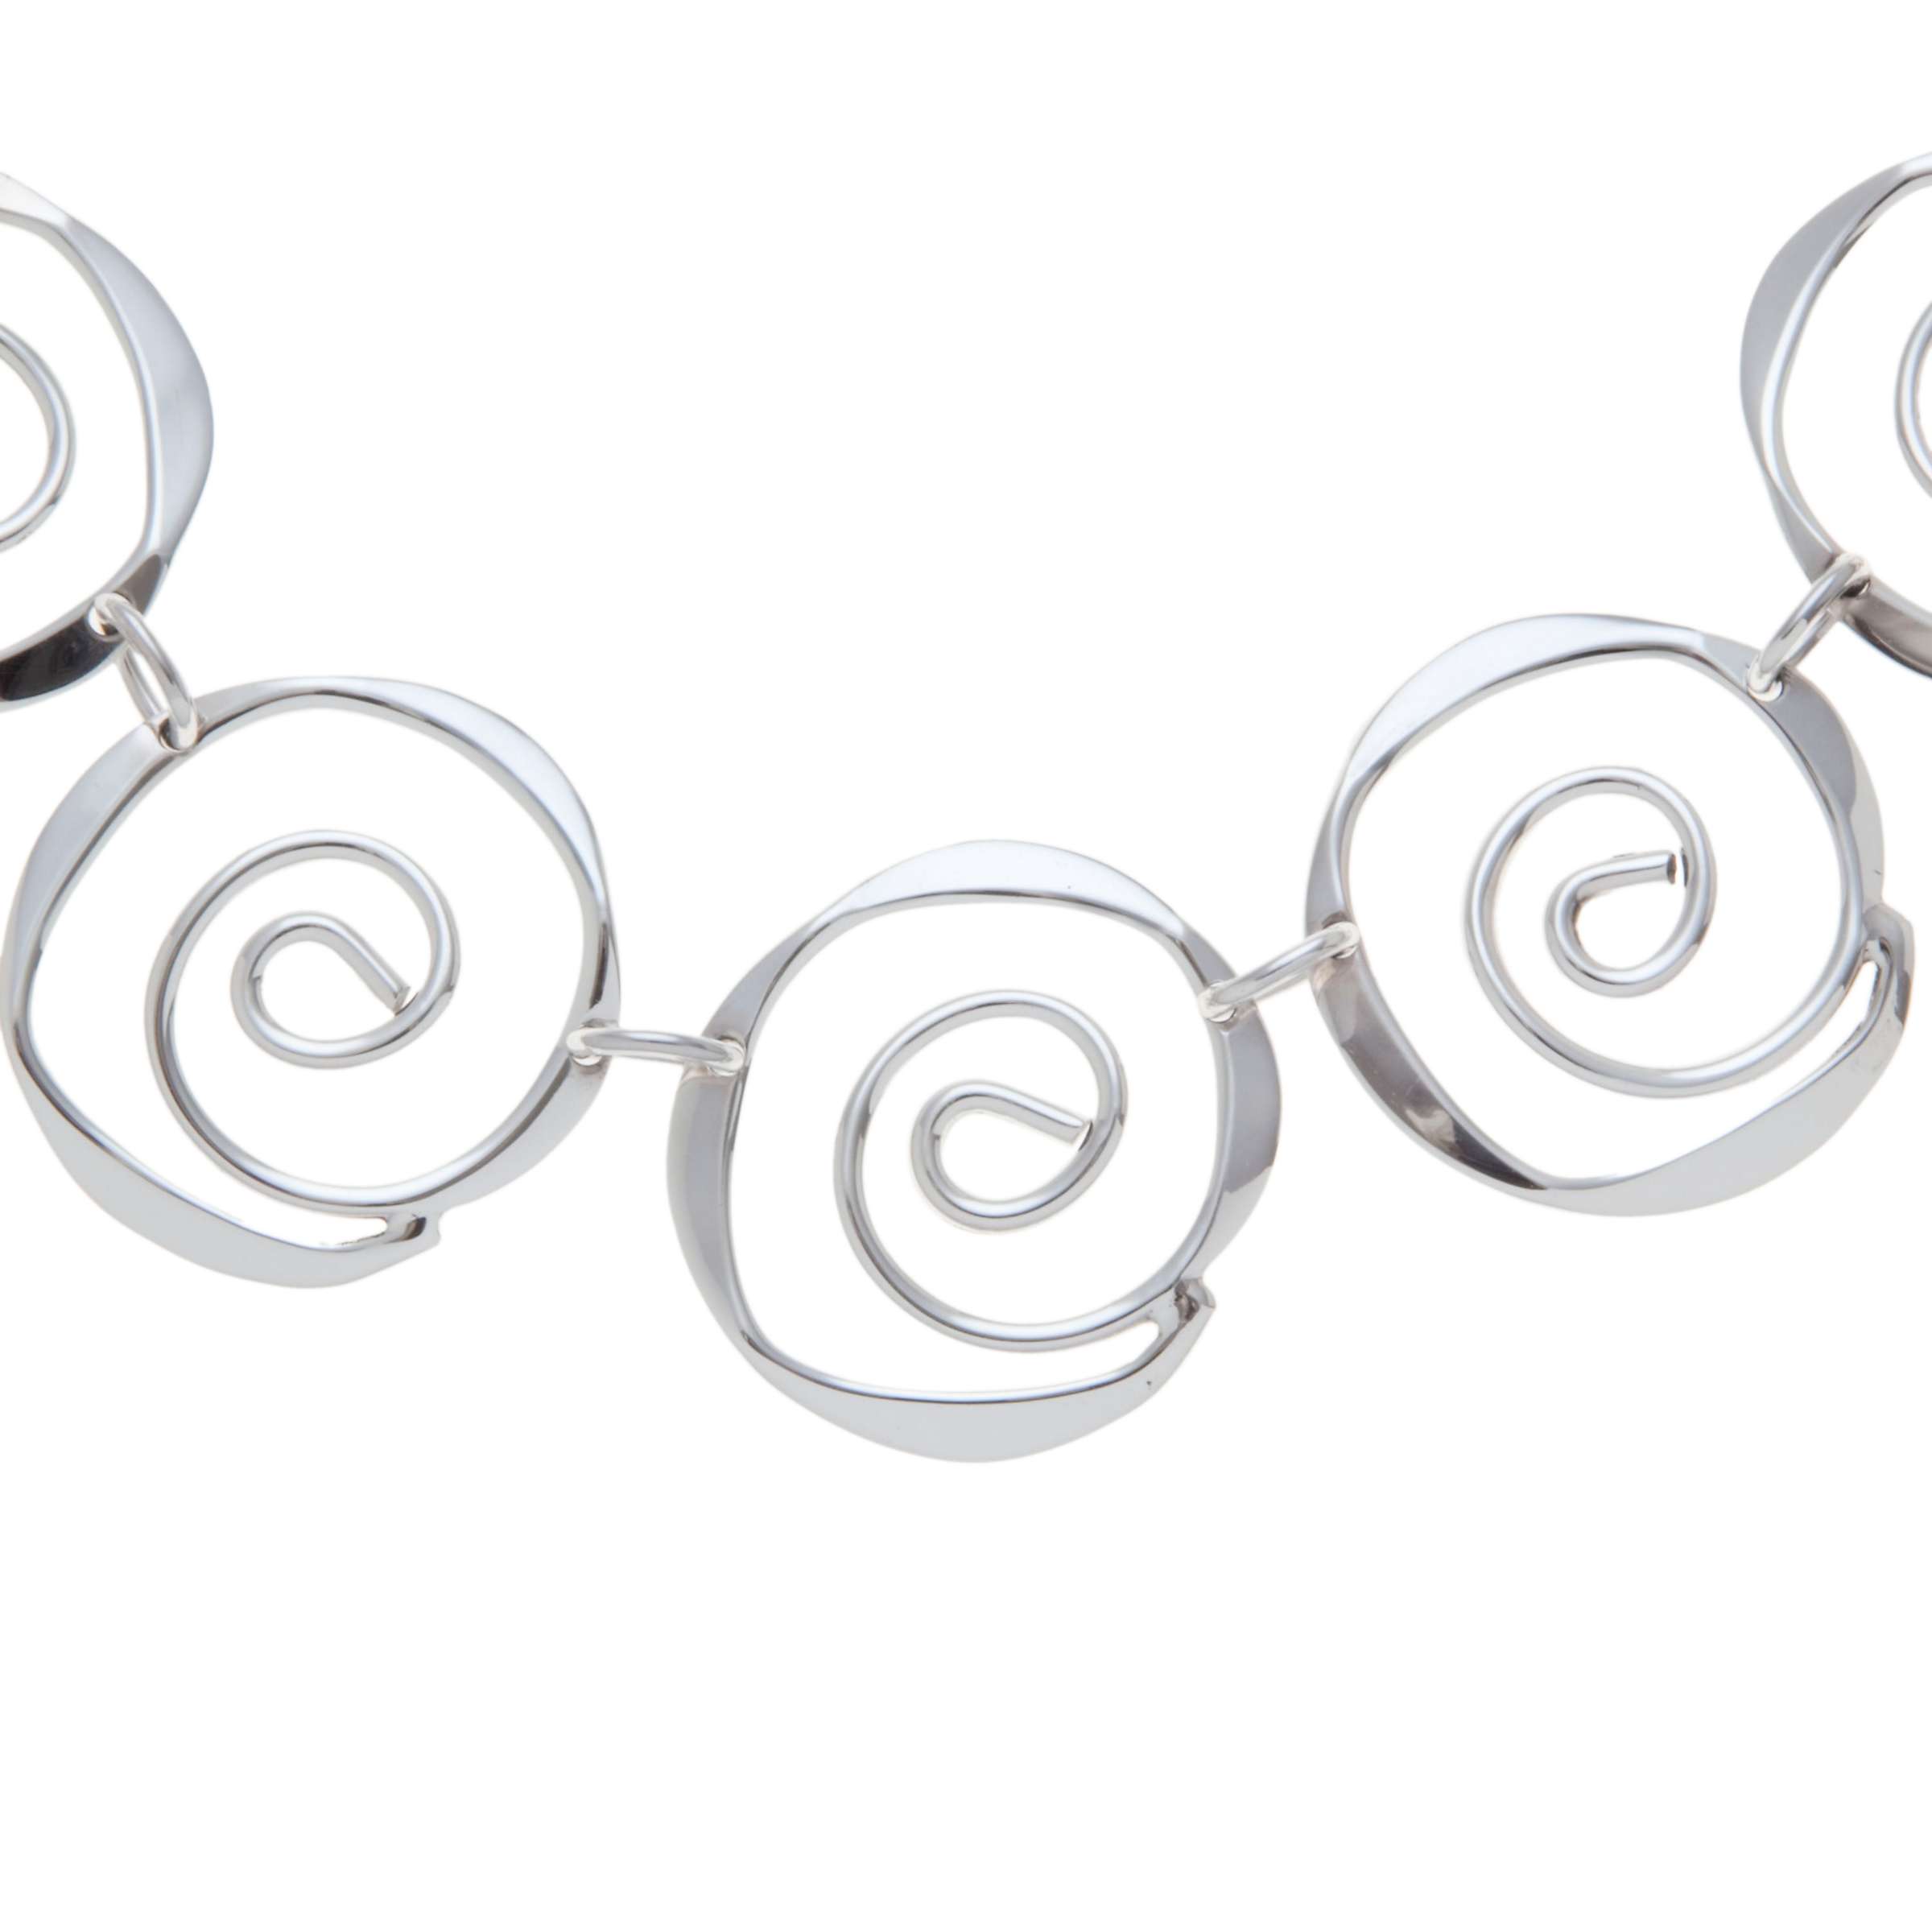 Buy Andea Sterling Silver Sculptured Spirals Necklace Online at johnlewis.com